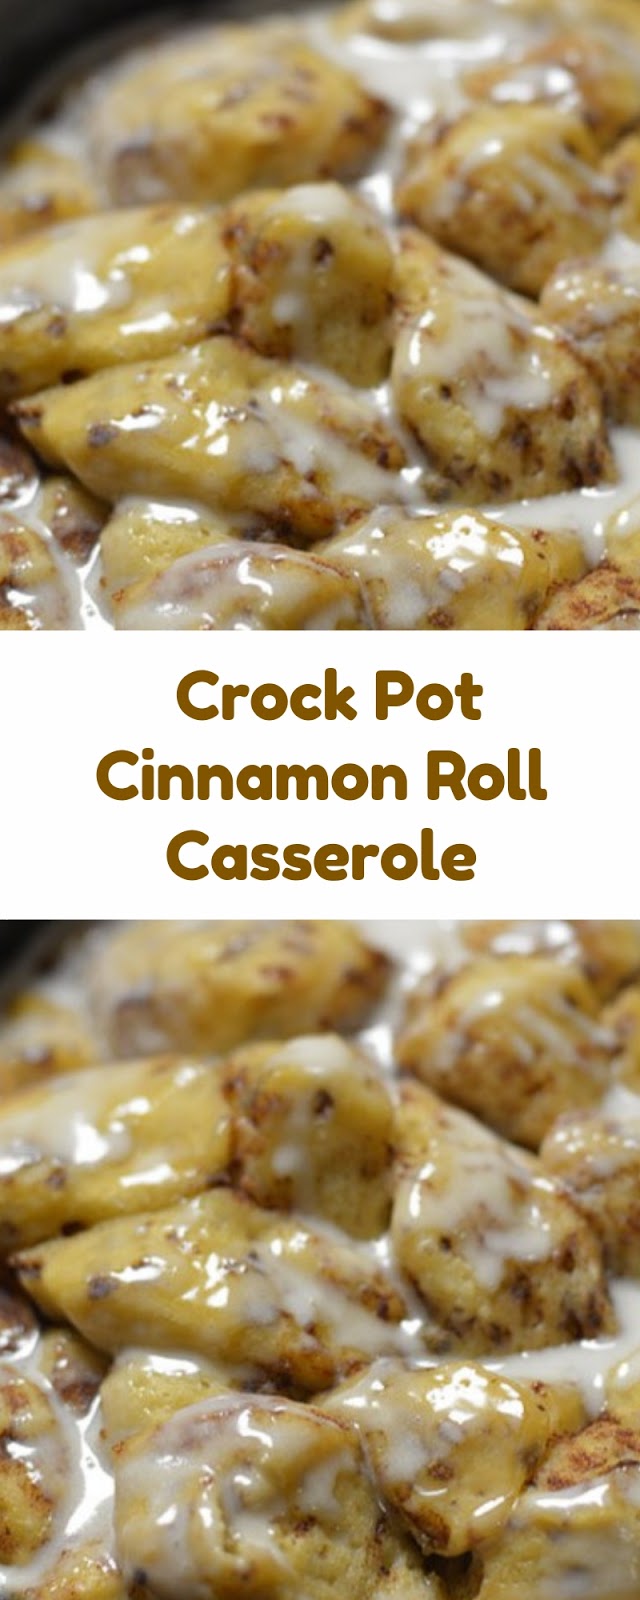  Crock Pot Cinnamon Roll Casserole